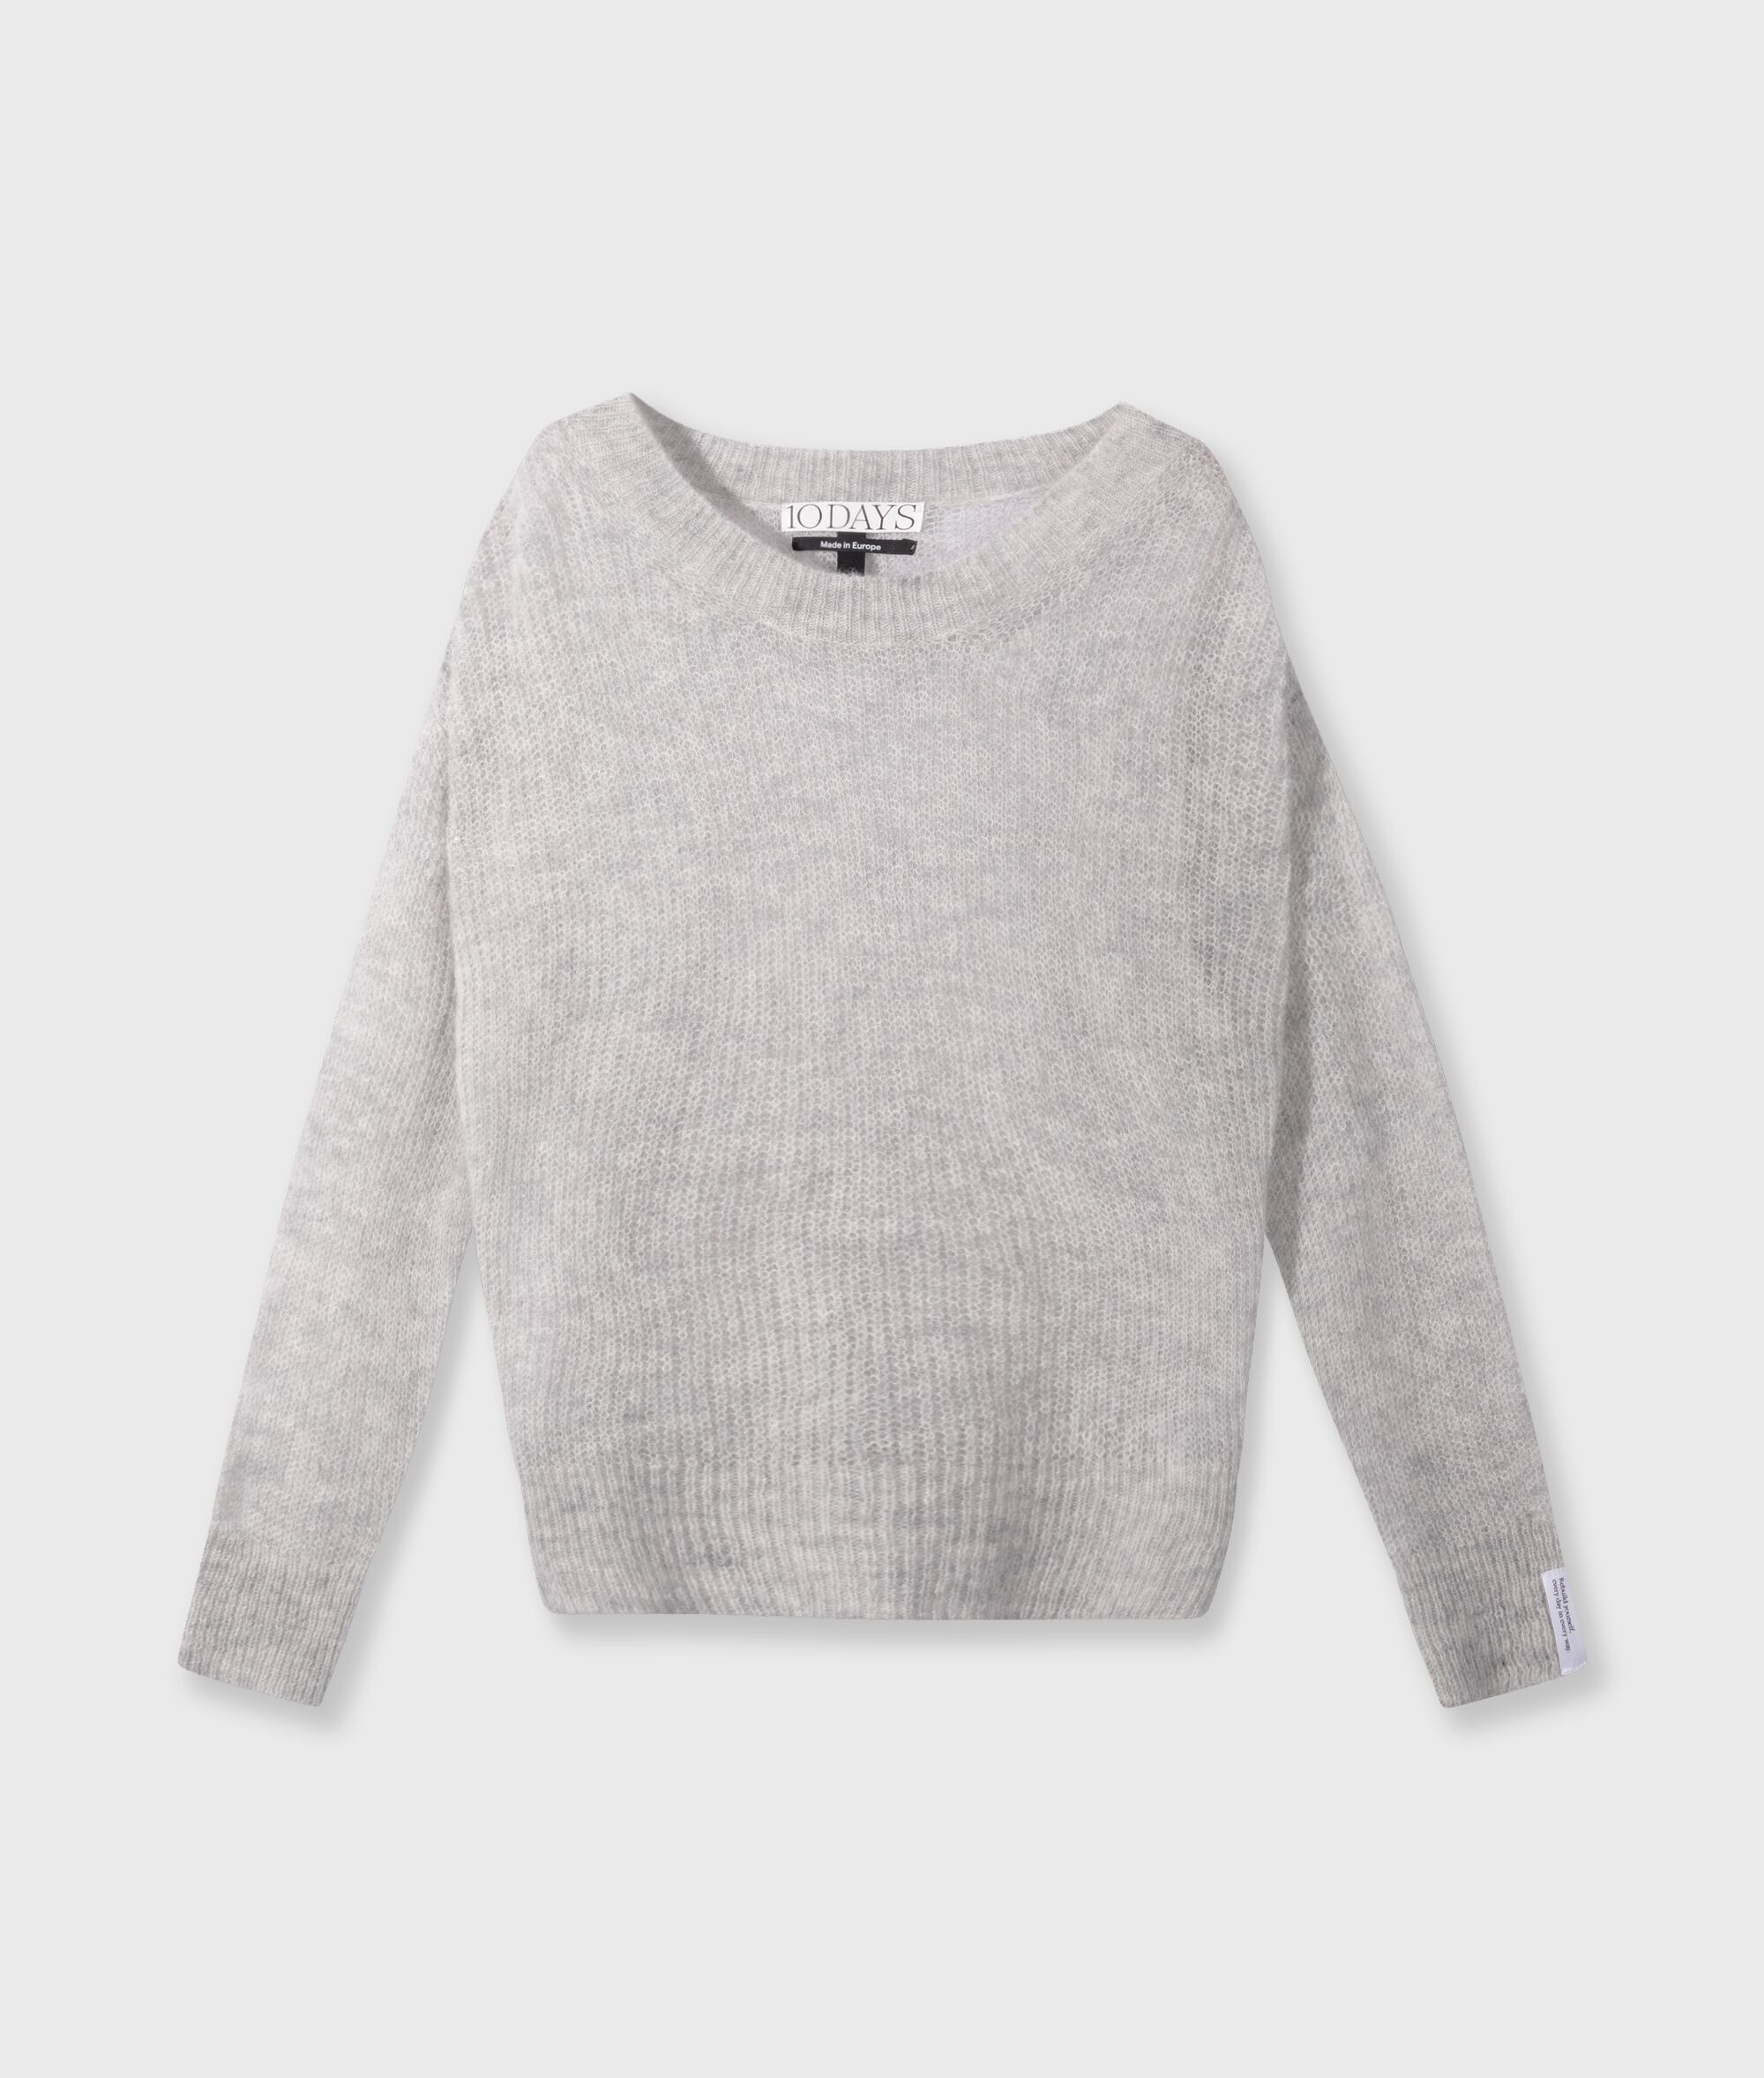 20 606 4203 4001 10days Amsterdam Loose Thin Knit Sweater Light Grey Melee Grau (1)